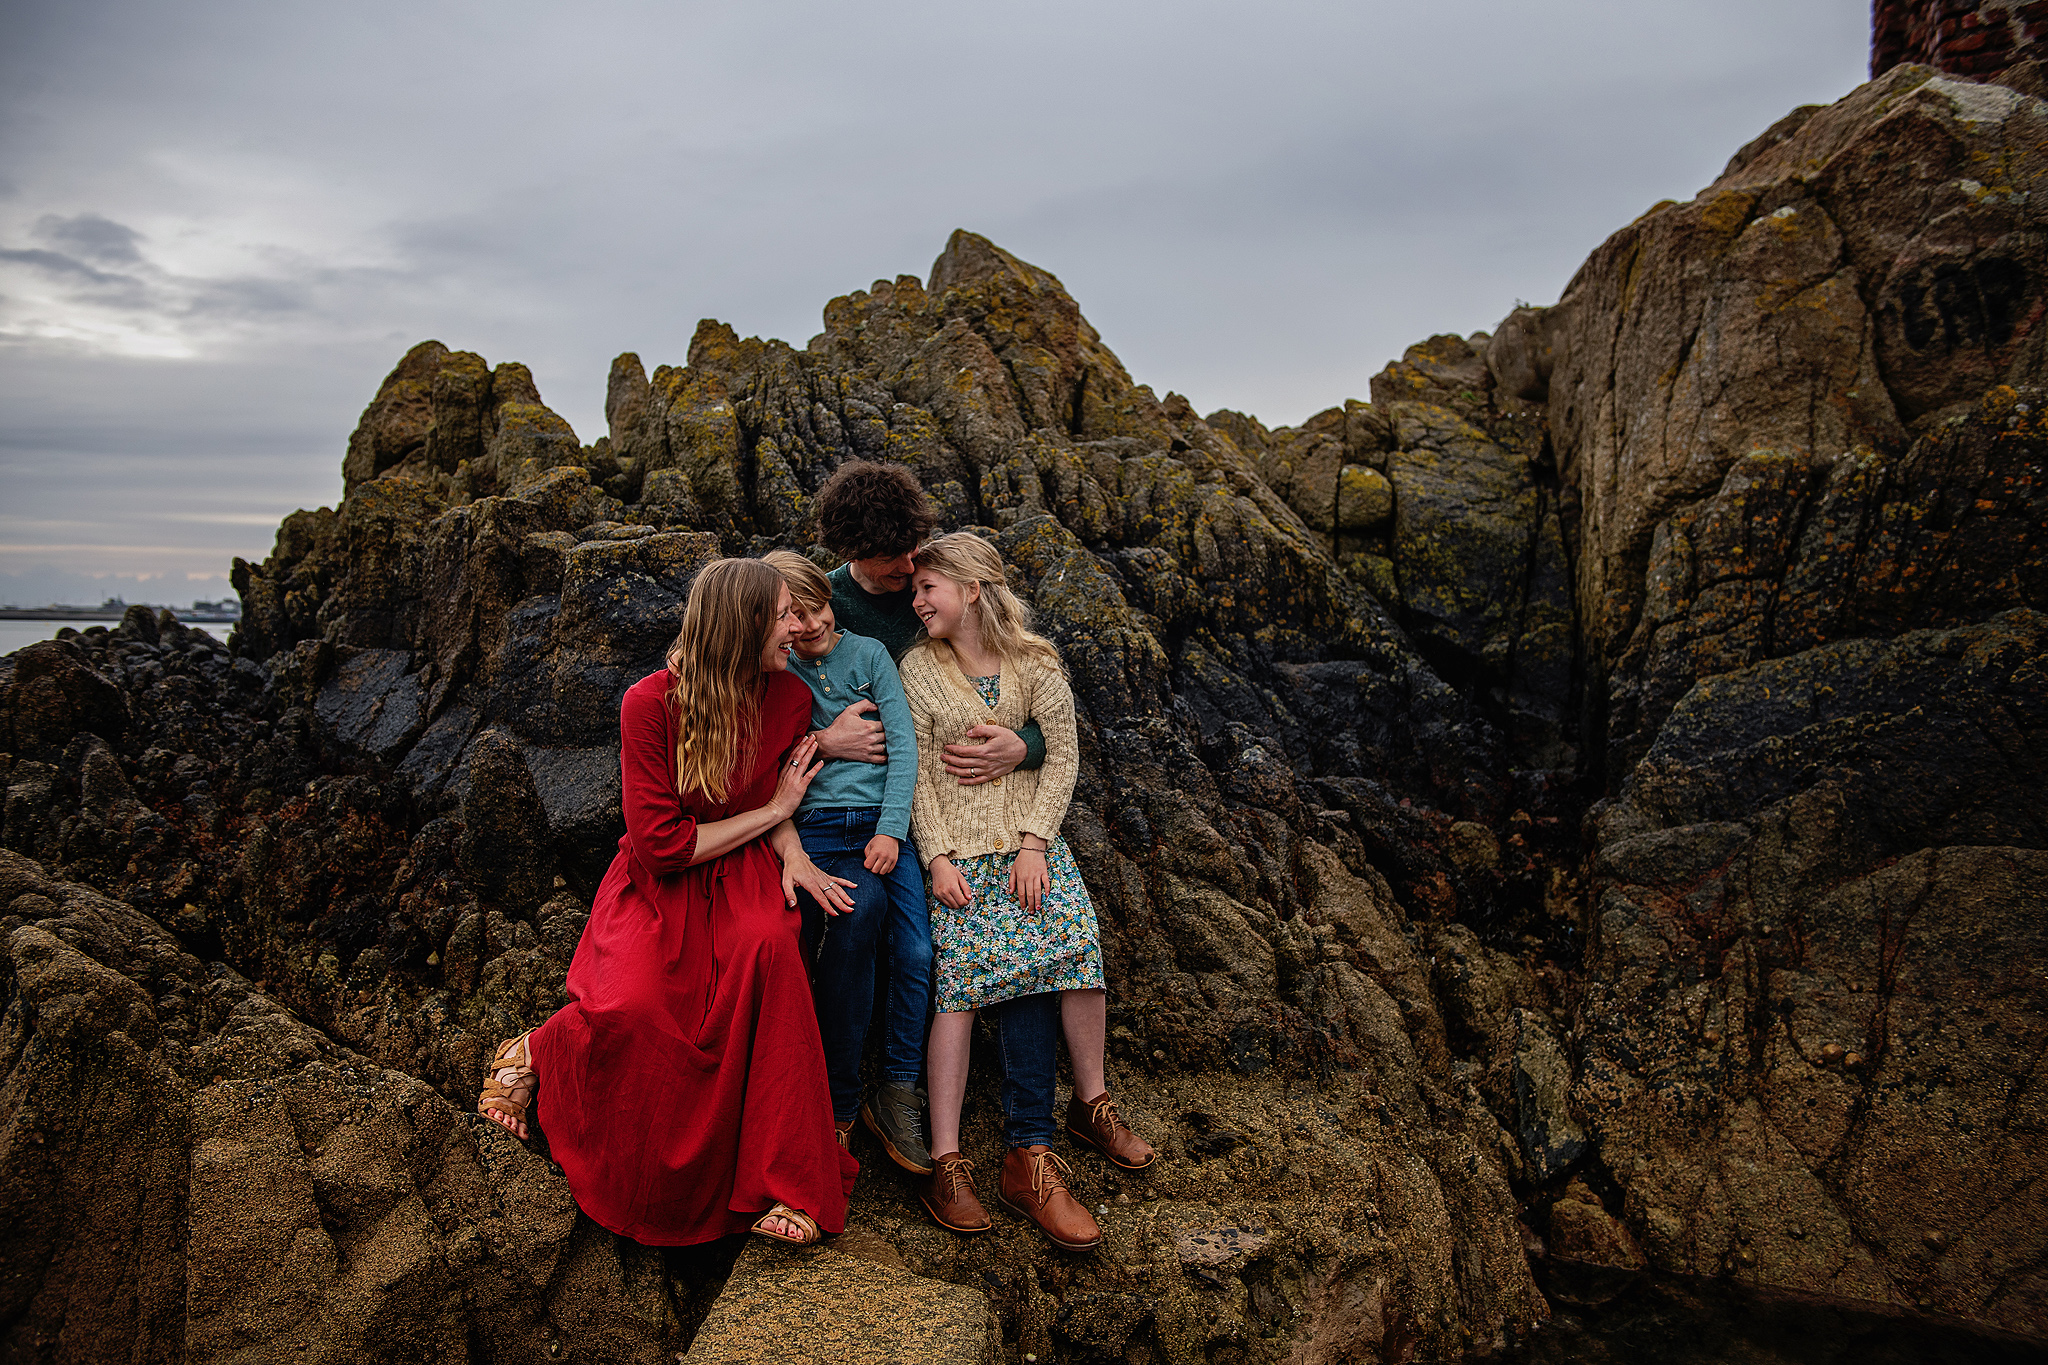 Outdoor Family Self Portraits - Family on Rocks